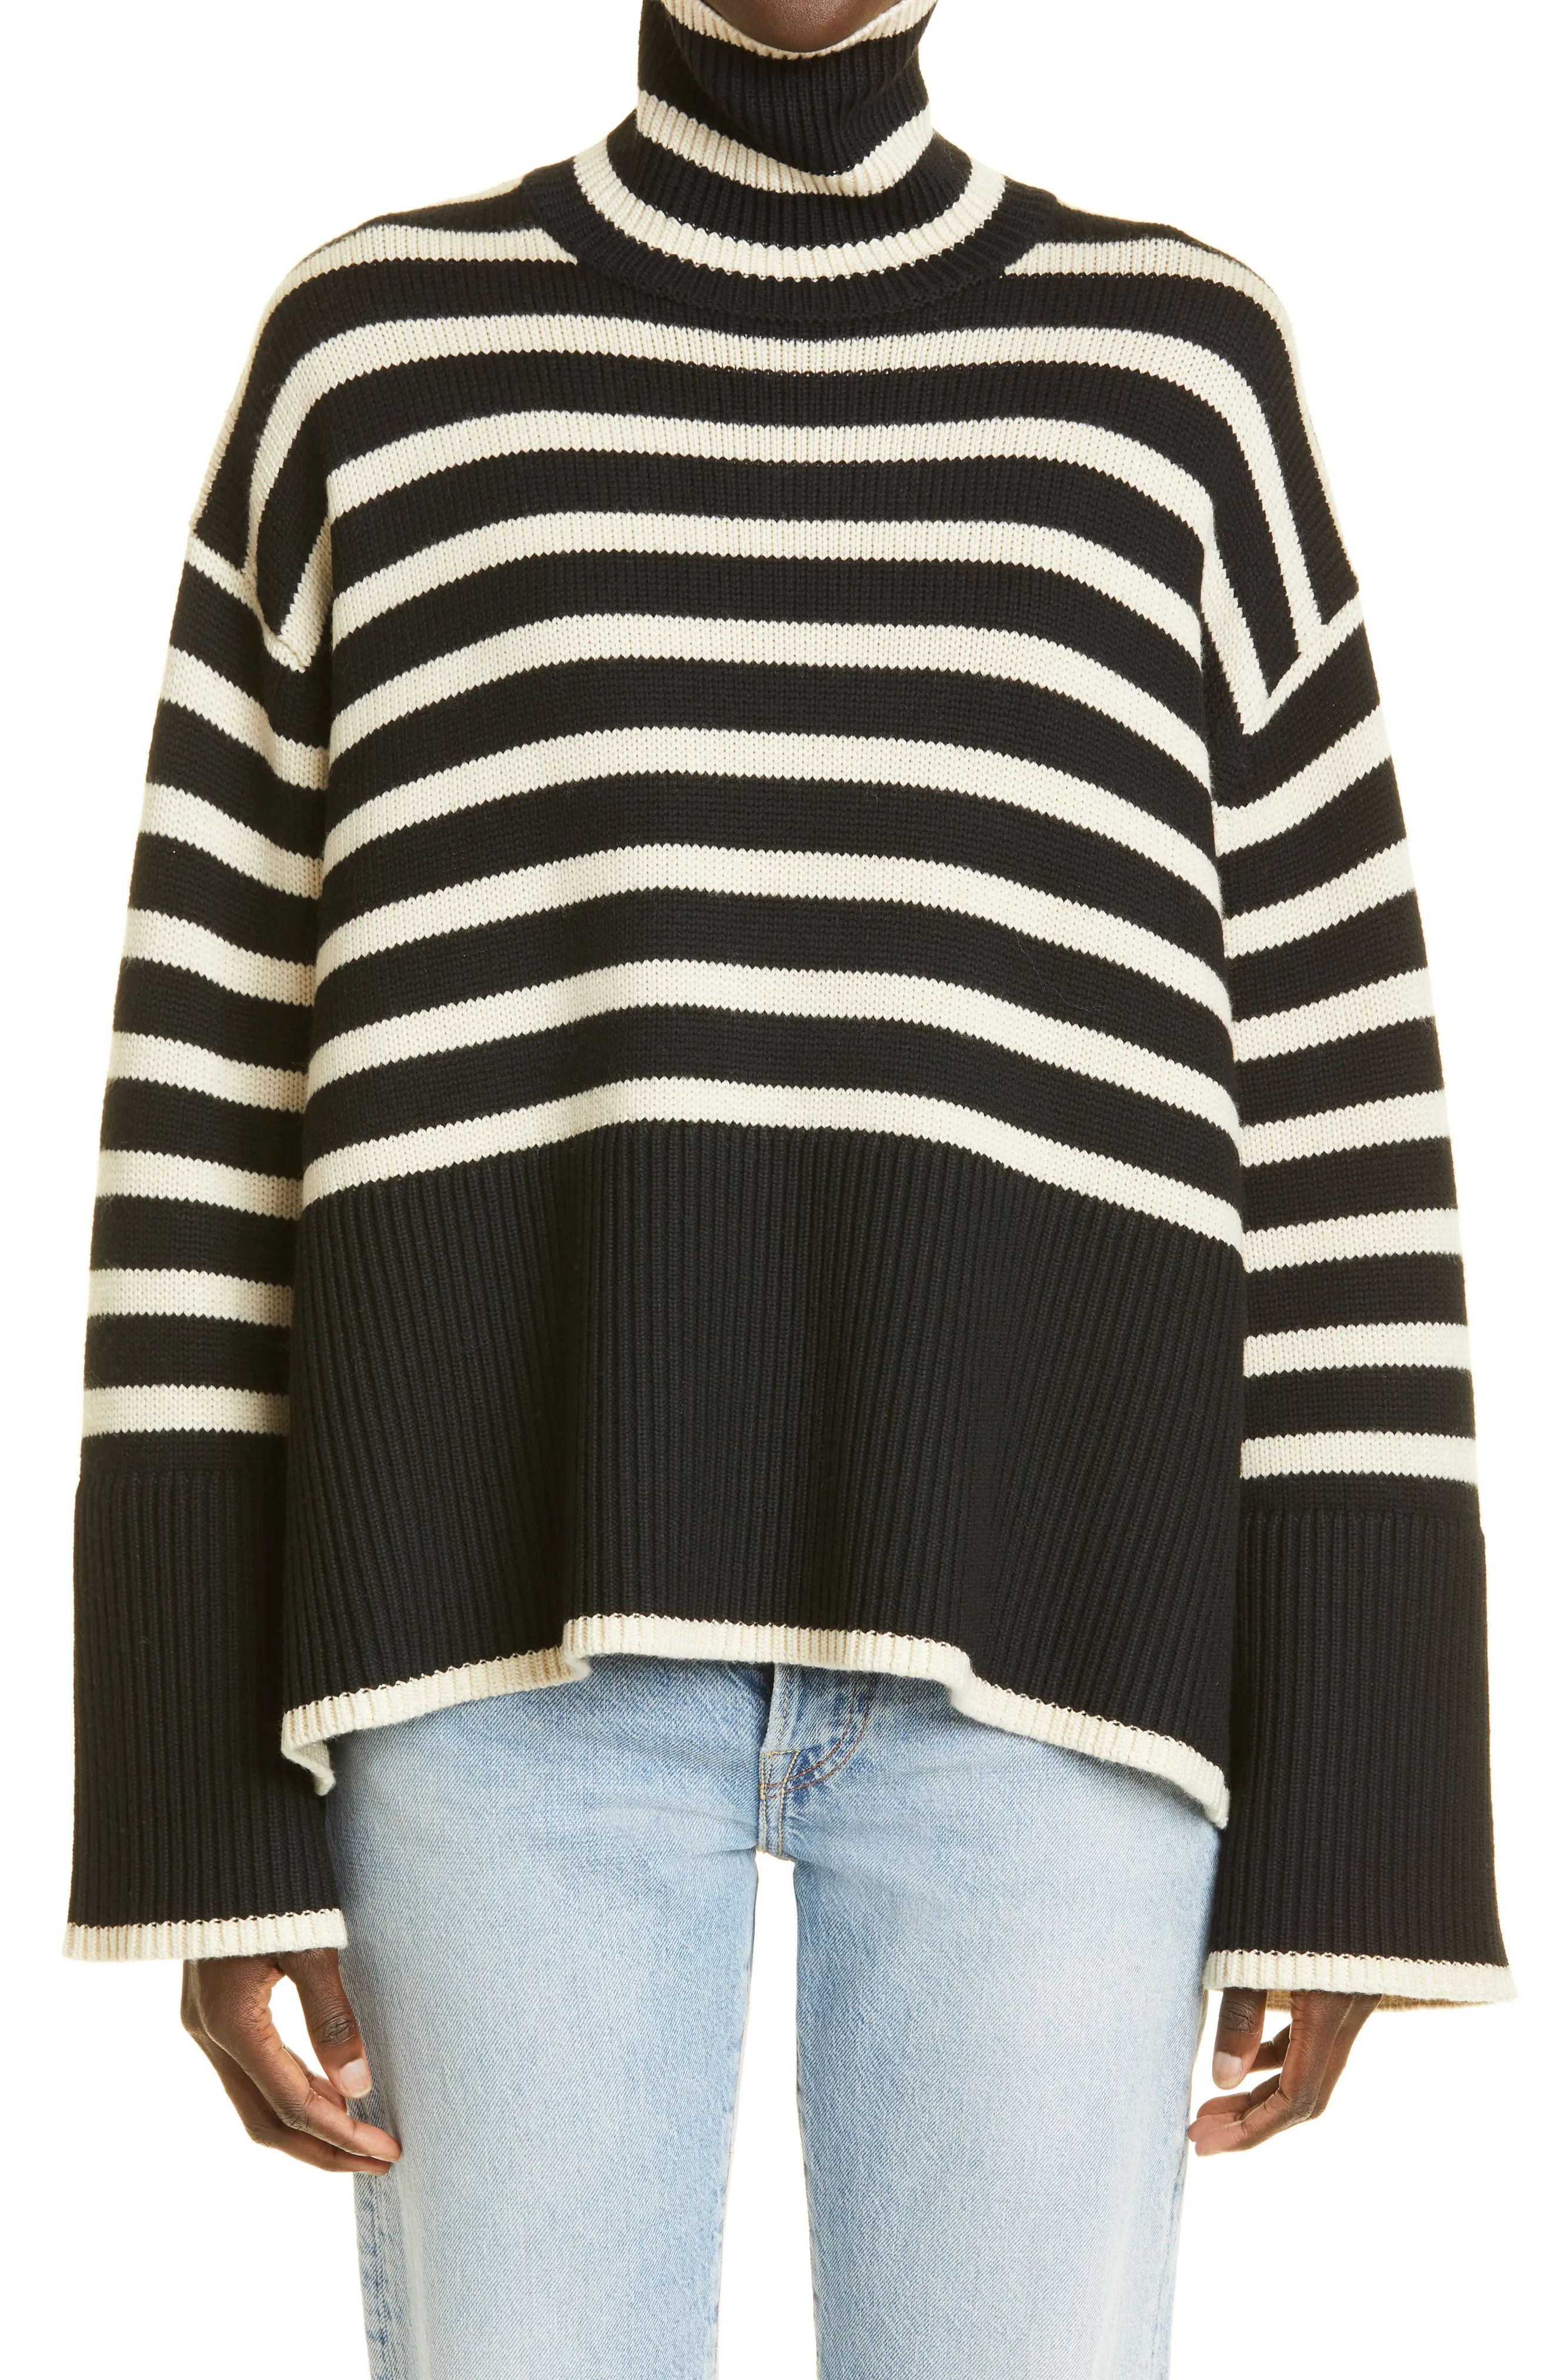 Toteme Stripe Wool Blend Turtleneck Sweater in Black Stripe at Nordstrom, Size X-Small | Nordstrom